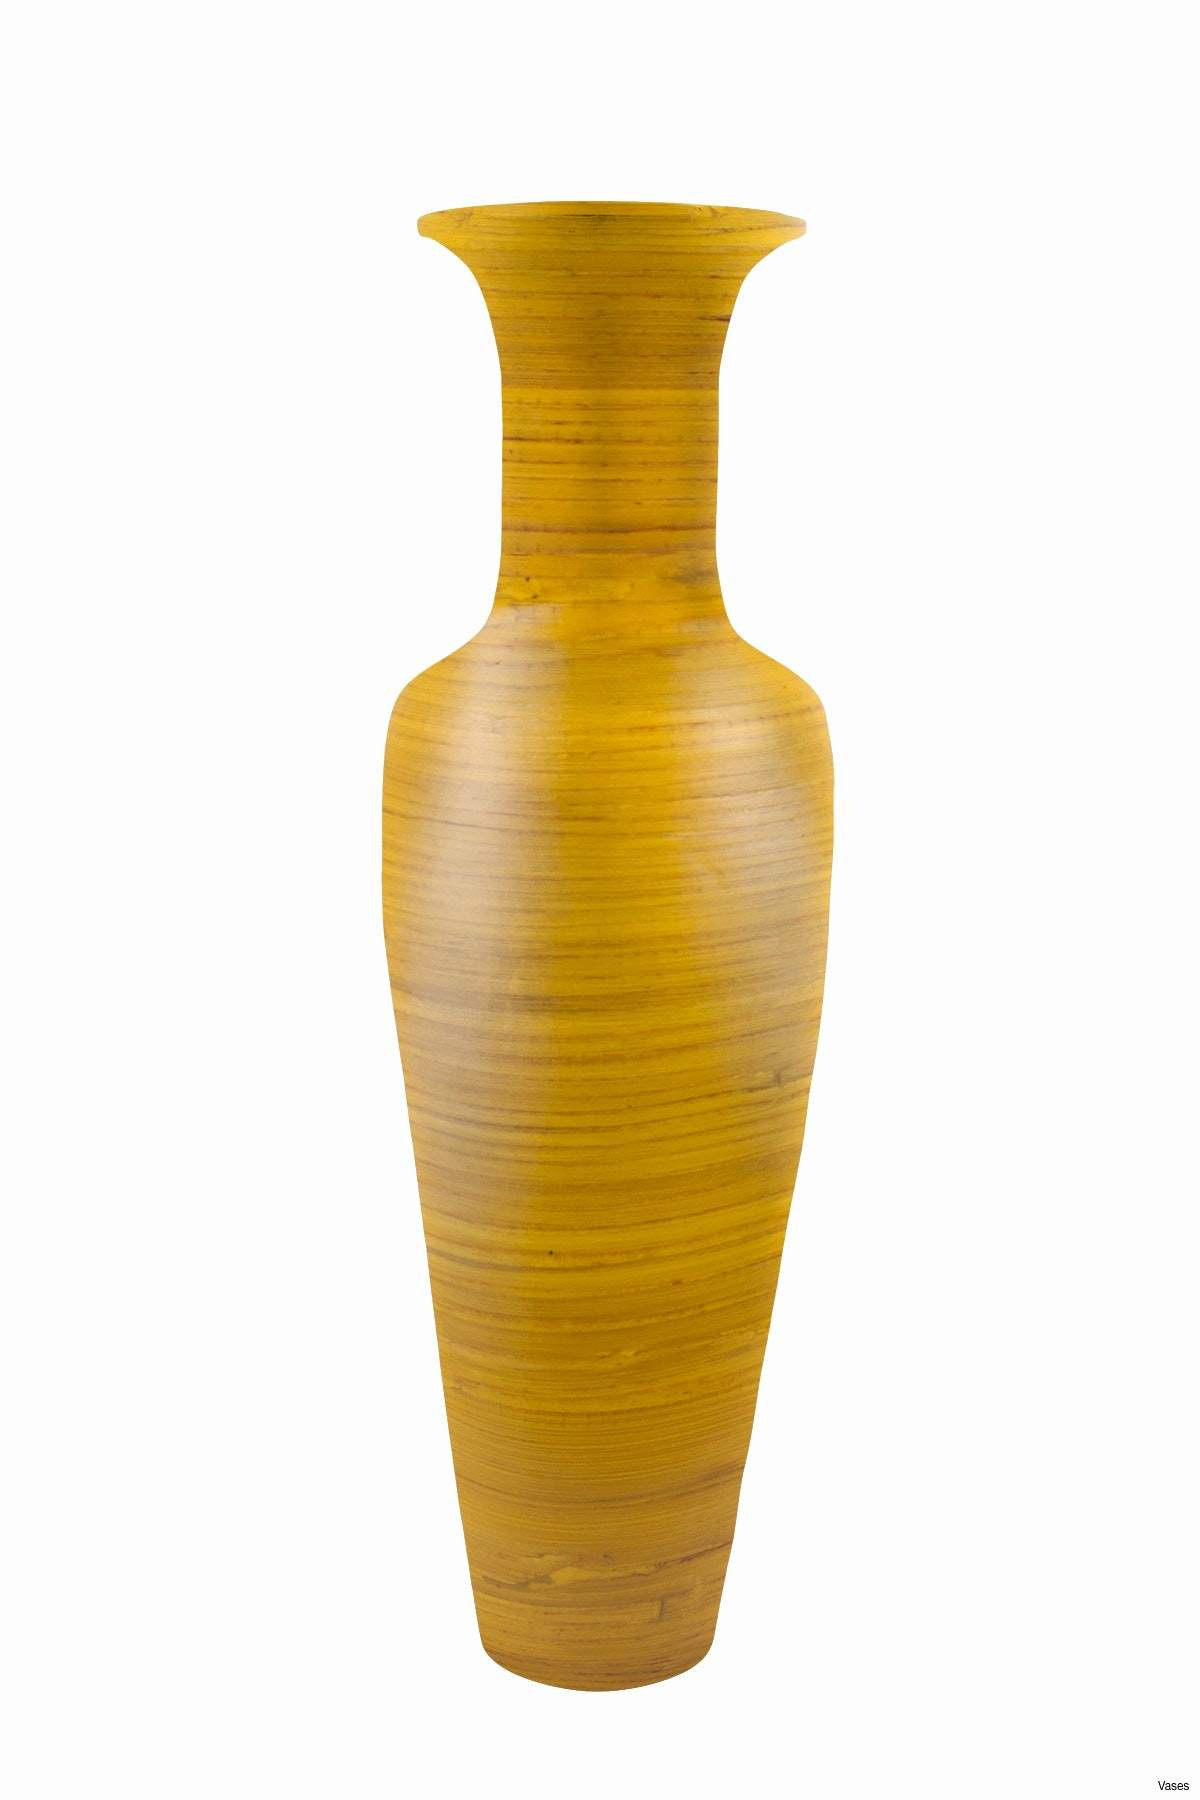 21 Elegant Glass Ginger Vase 2024 free download glass ginger vase of vase sets of 3 image rippled glass bud vase set of 3 potterybarn regarding vase sets of 3 gallery area floor rugs new joaquin gray vases set 3 2h pottery